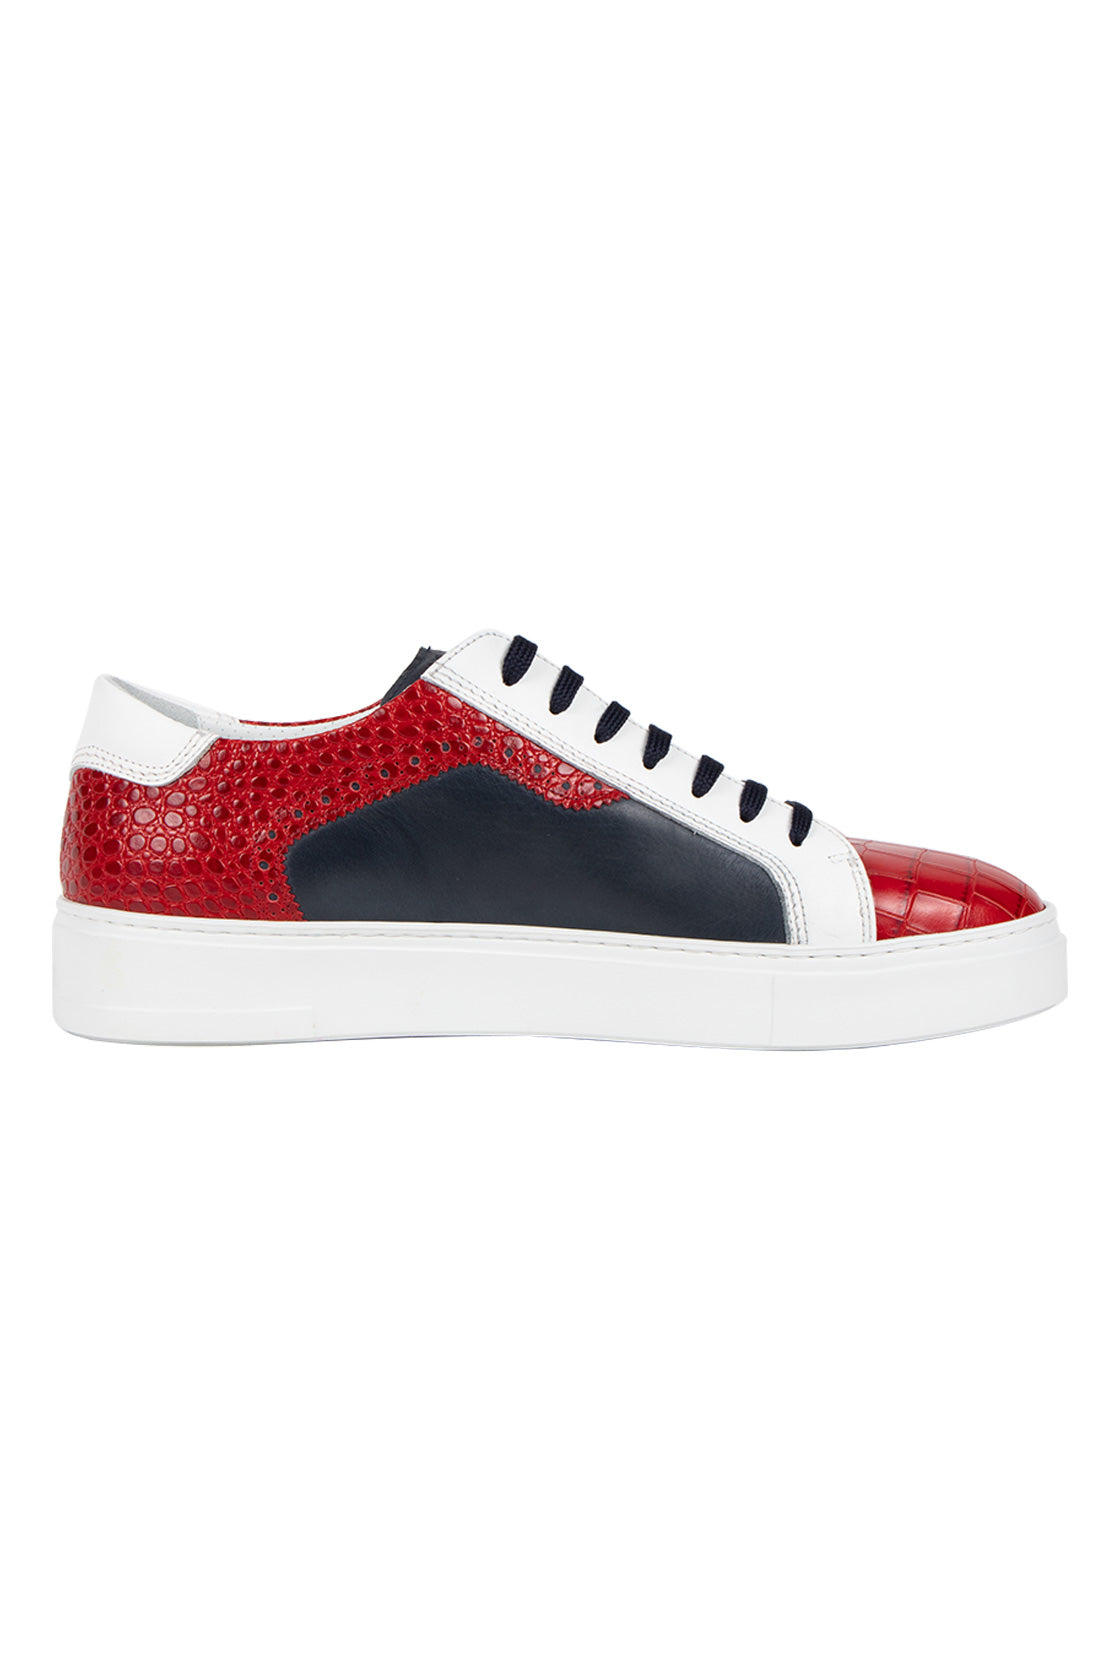 Galizio Torresi Lace Sneaker Red/Wht/Blue